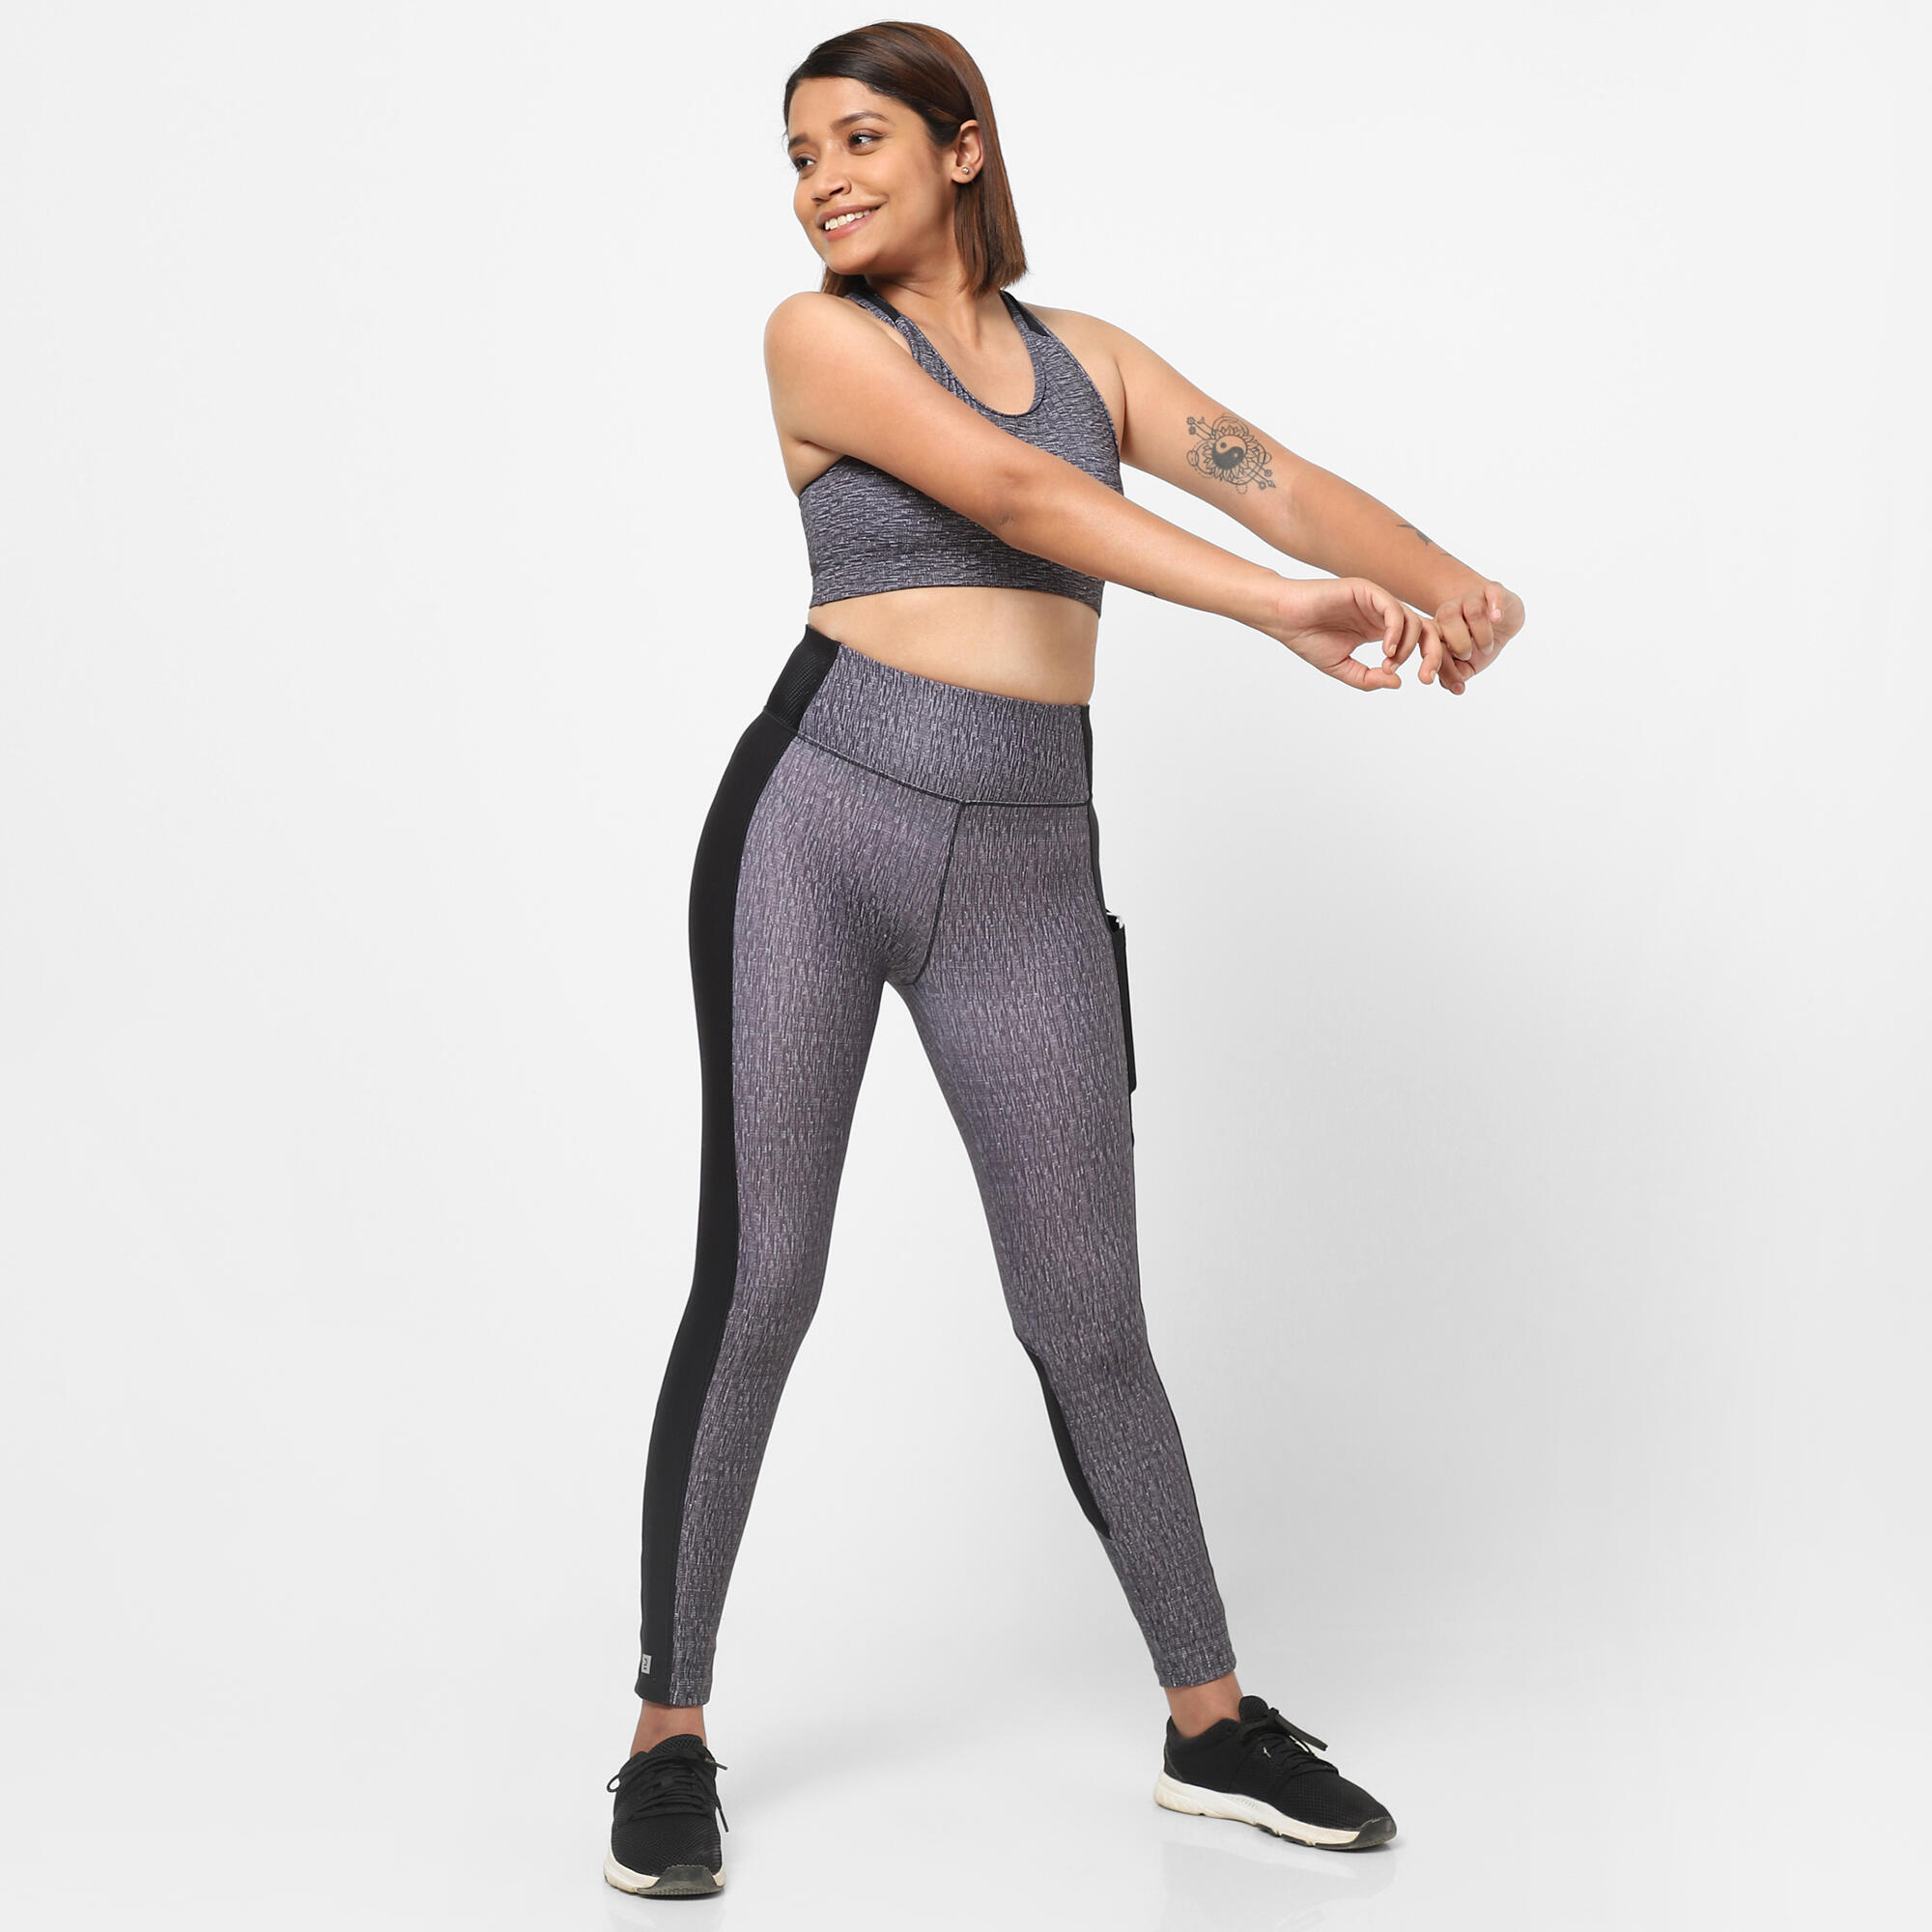 Reveal more than 128 womens gym leggings best